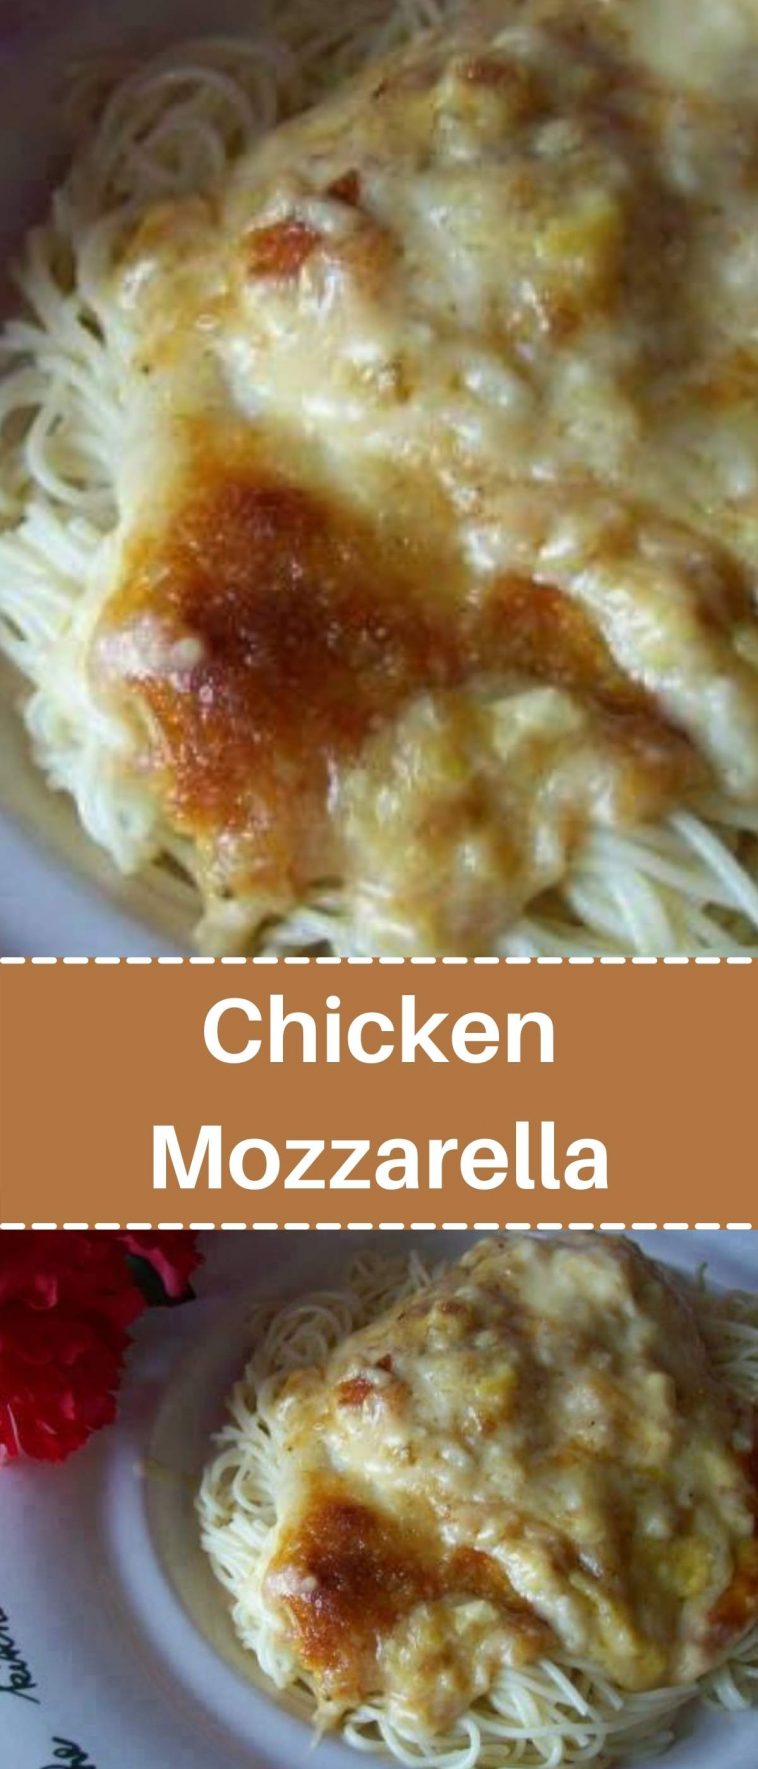 Chicken Mozzarella